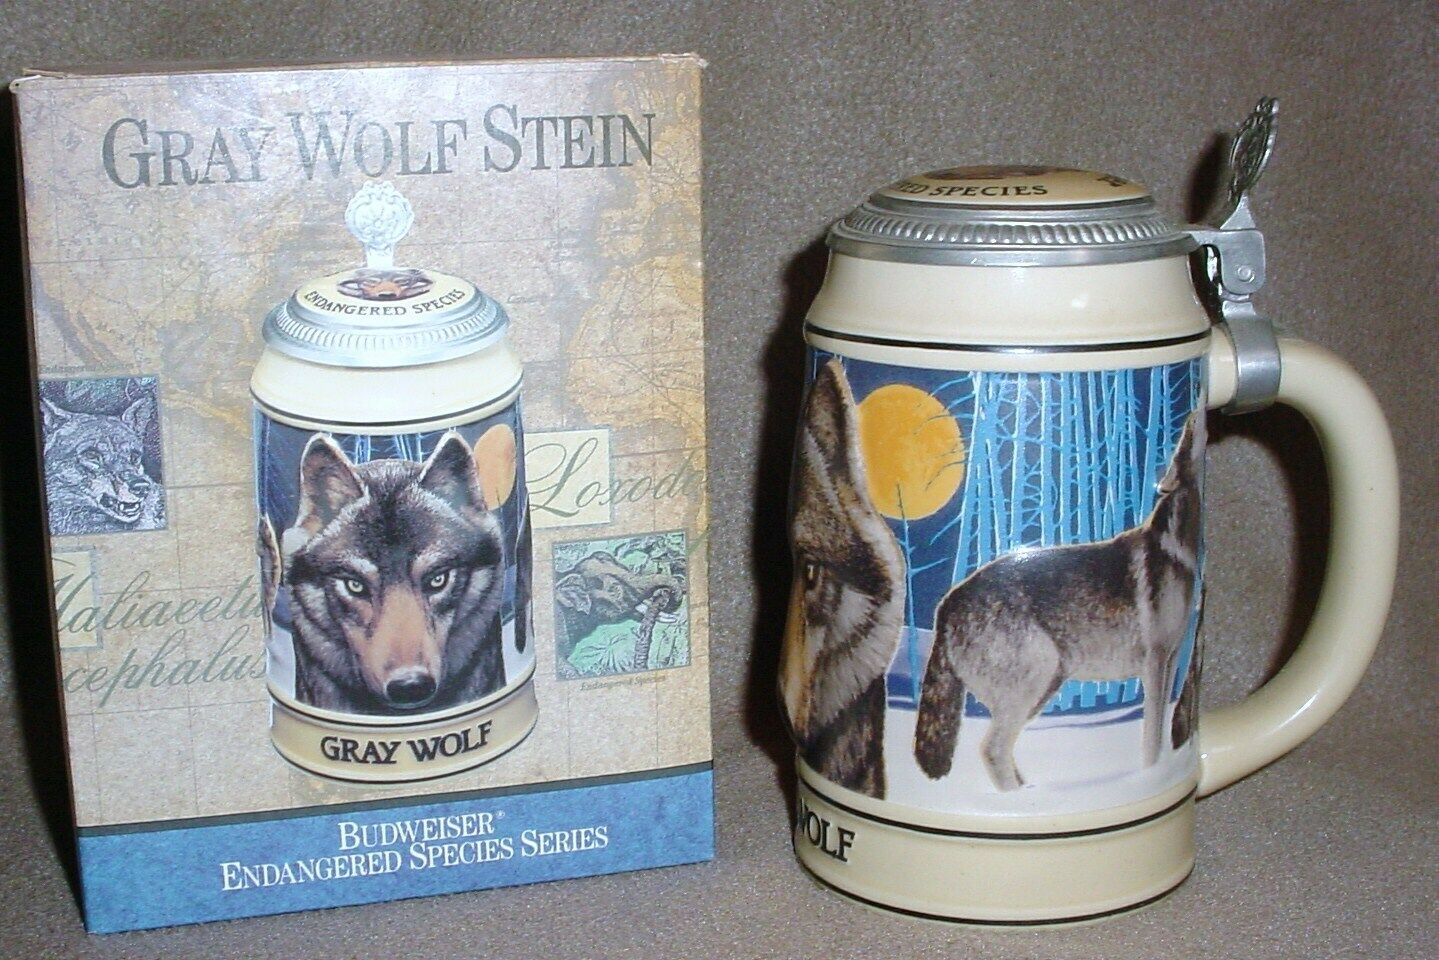 Budweiser Endangered Species Series Gray Wolf Beer Stein, Limited Edition 1994